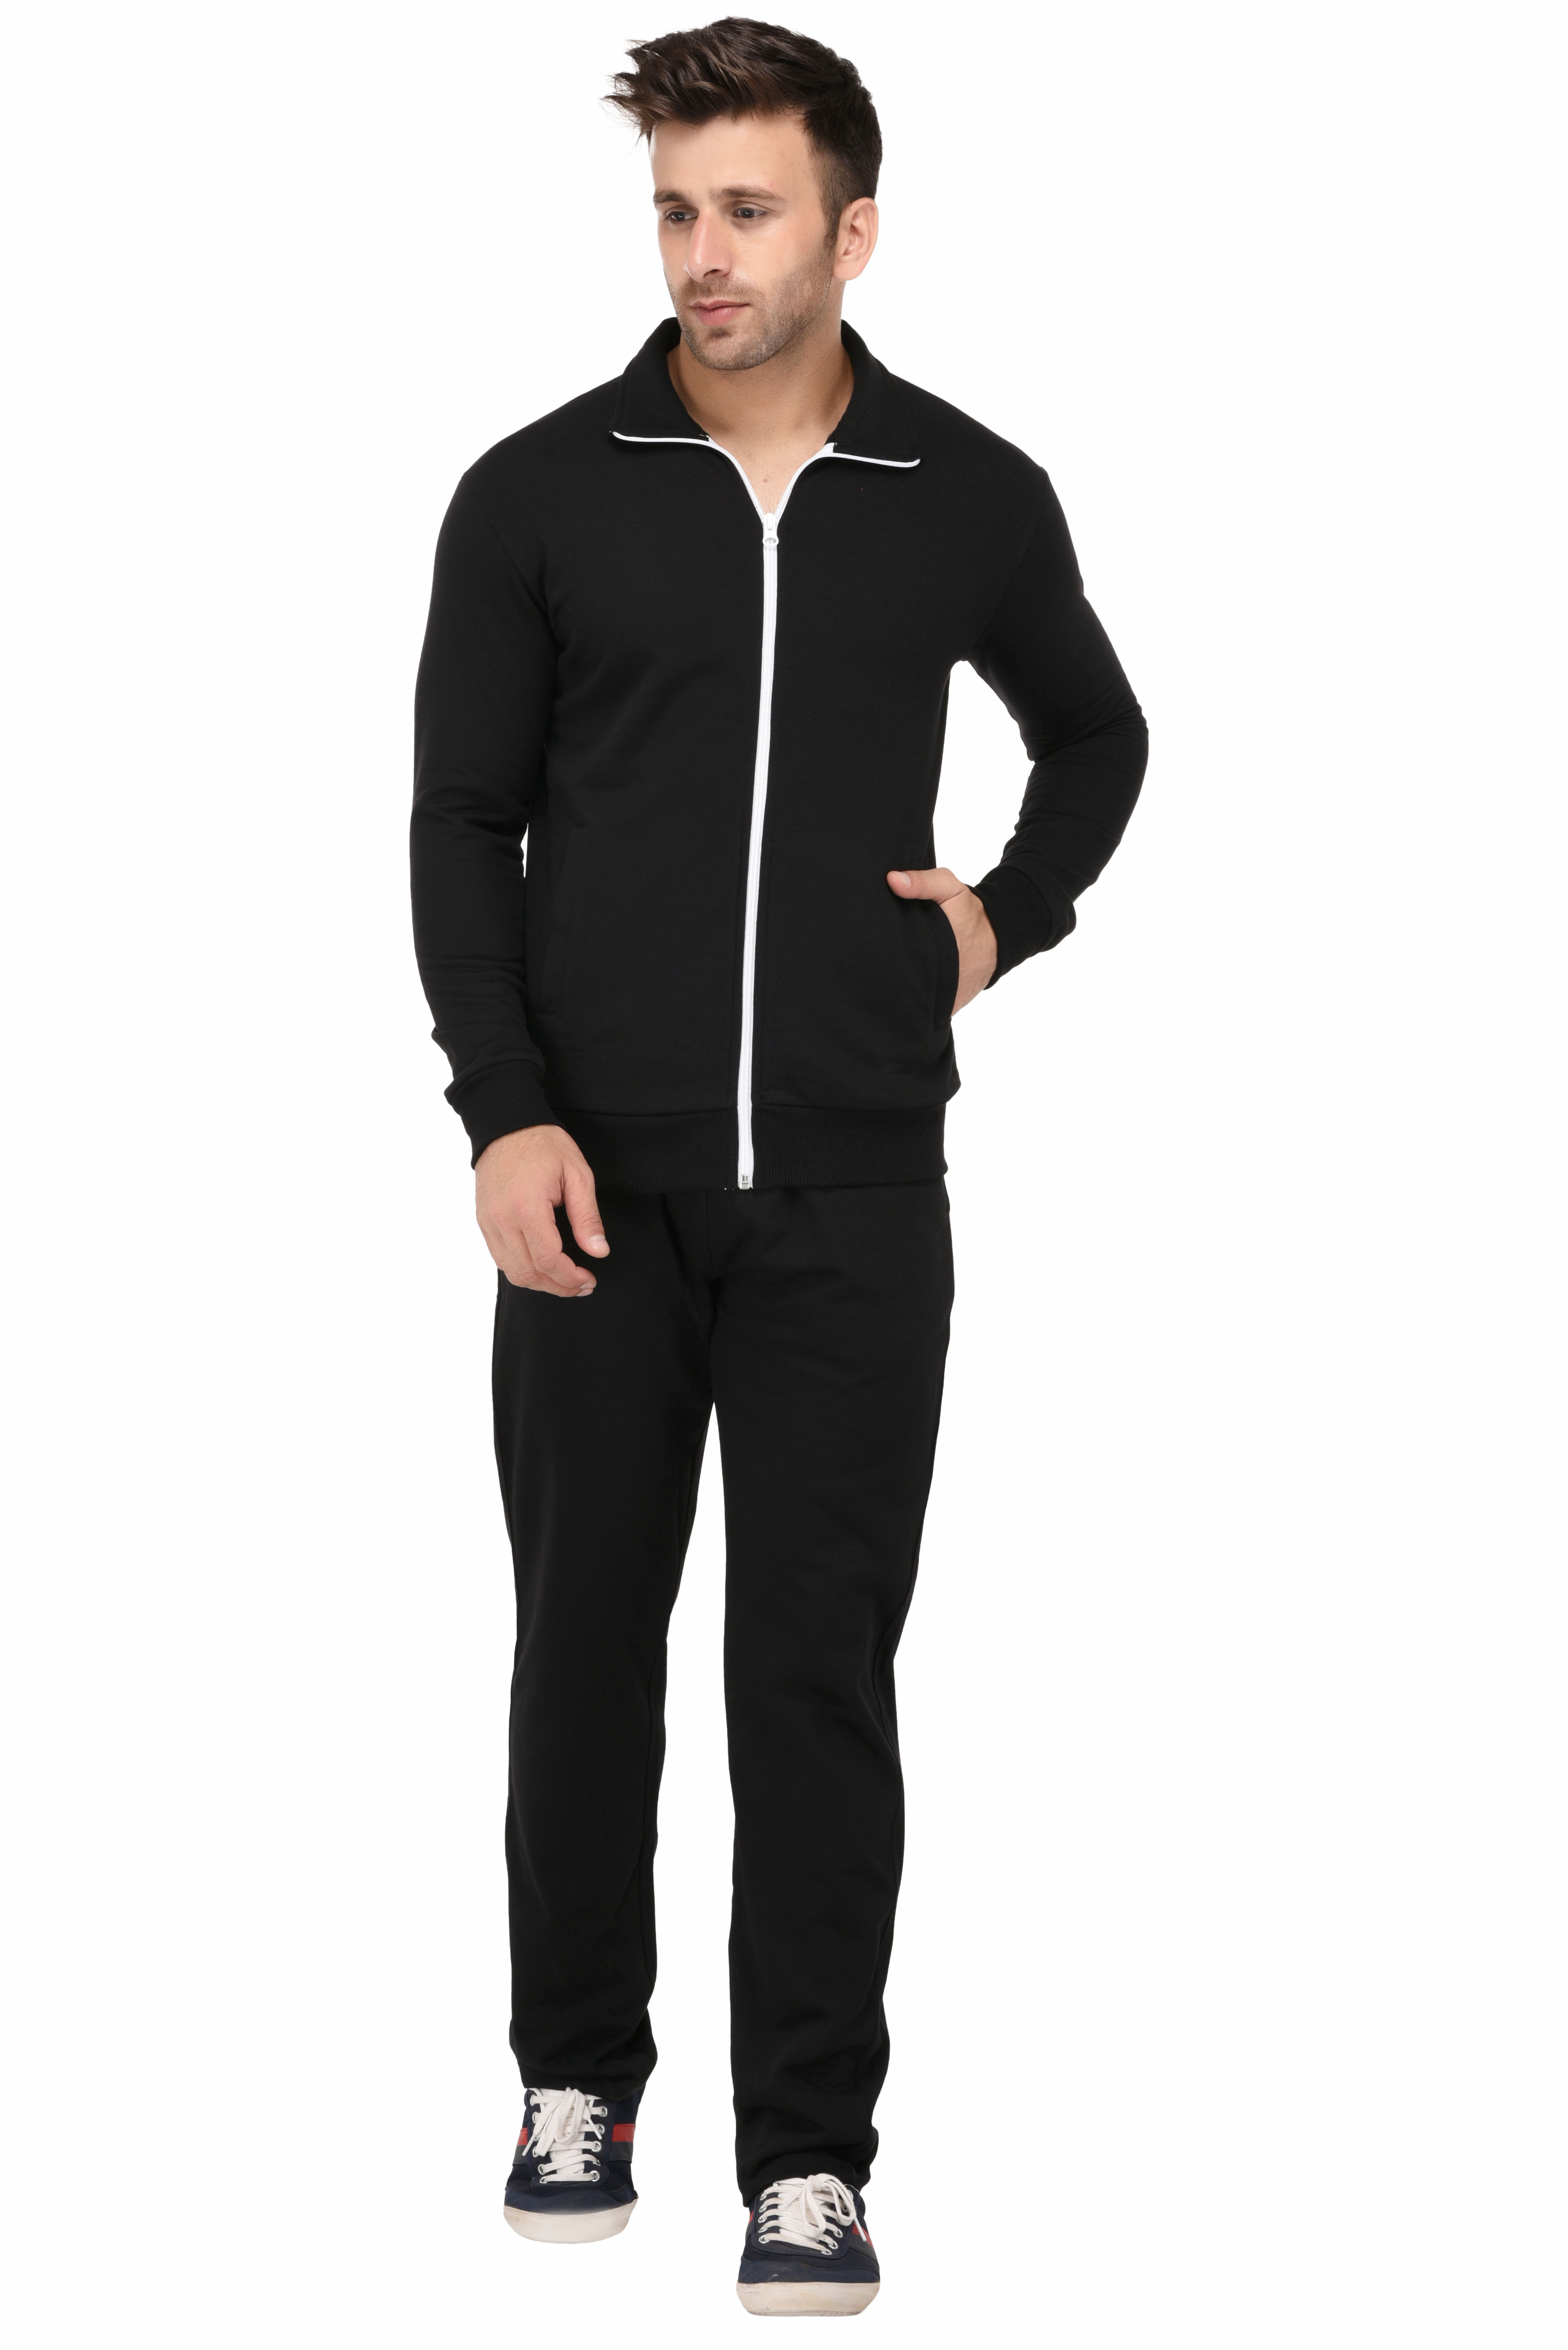 Buy Vivid Bharti Black Full Sleeve Zippered Track Suit Online @ ₹1399 ...